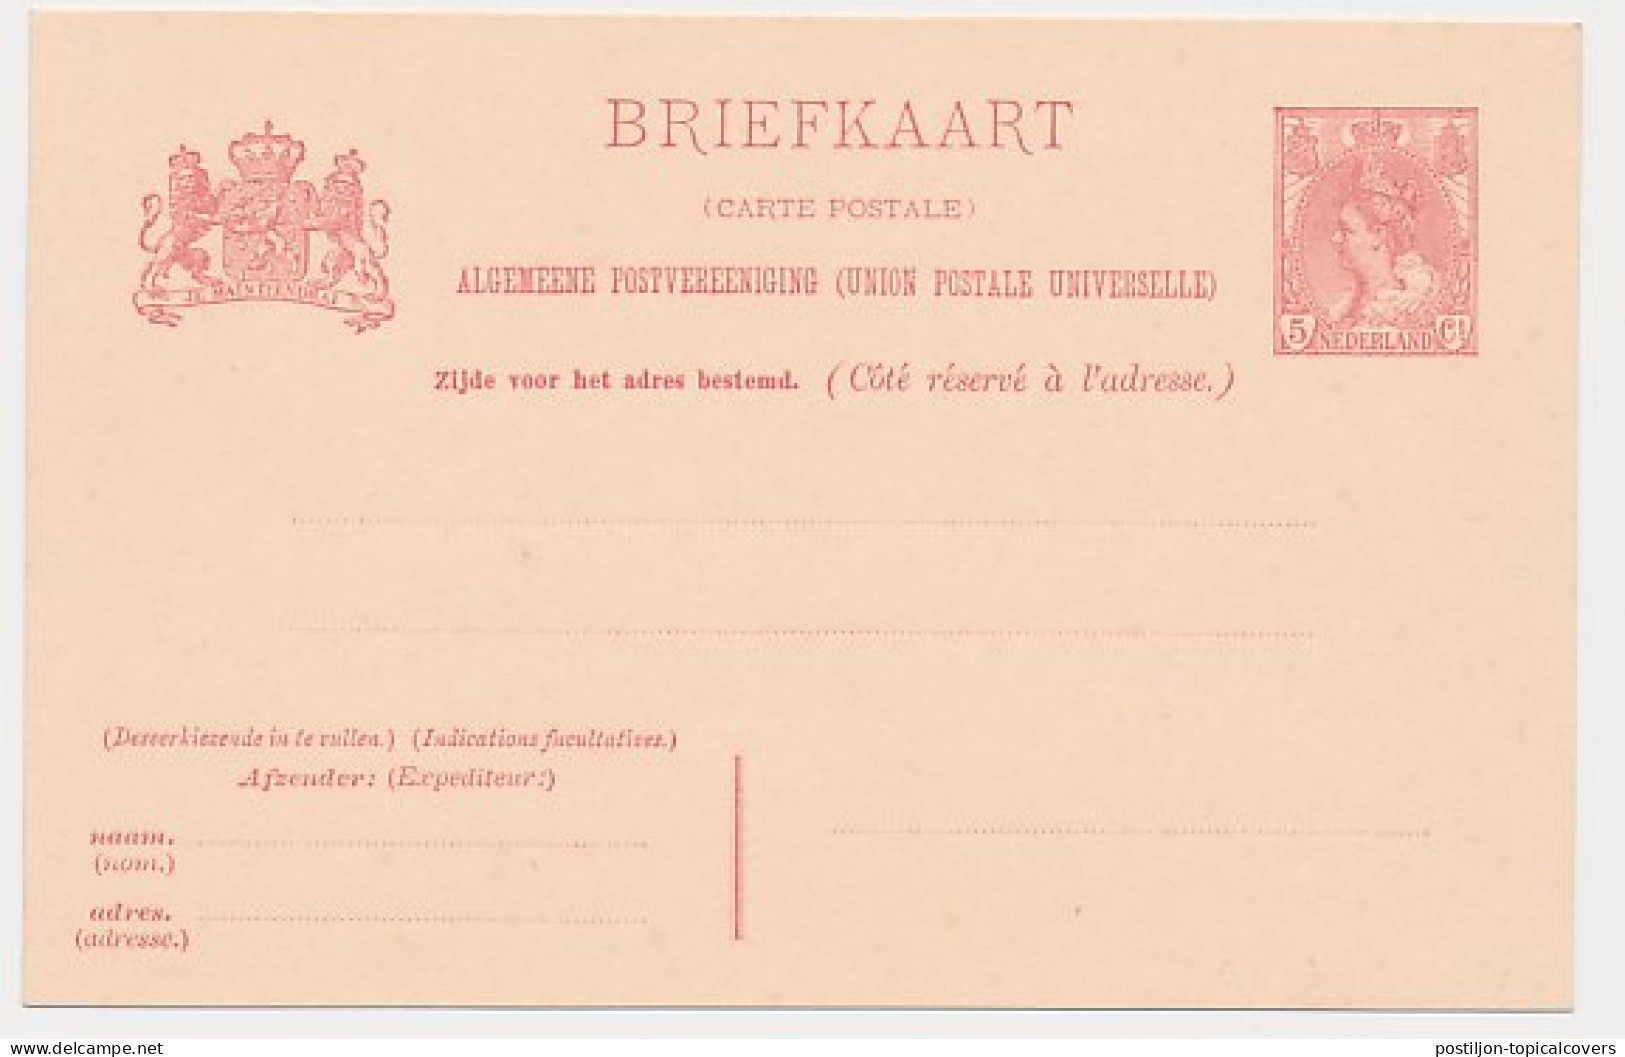 Briefkaart G. 61 - Accent Op Expediteur Ontbreekt - Postal Stationery